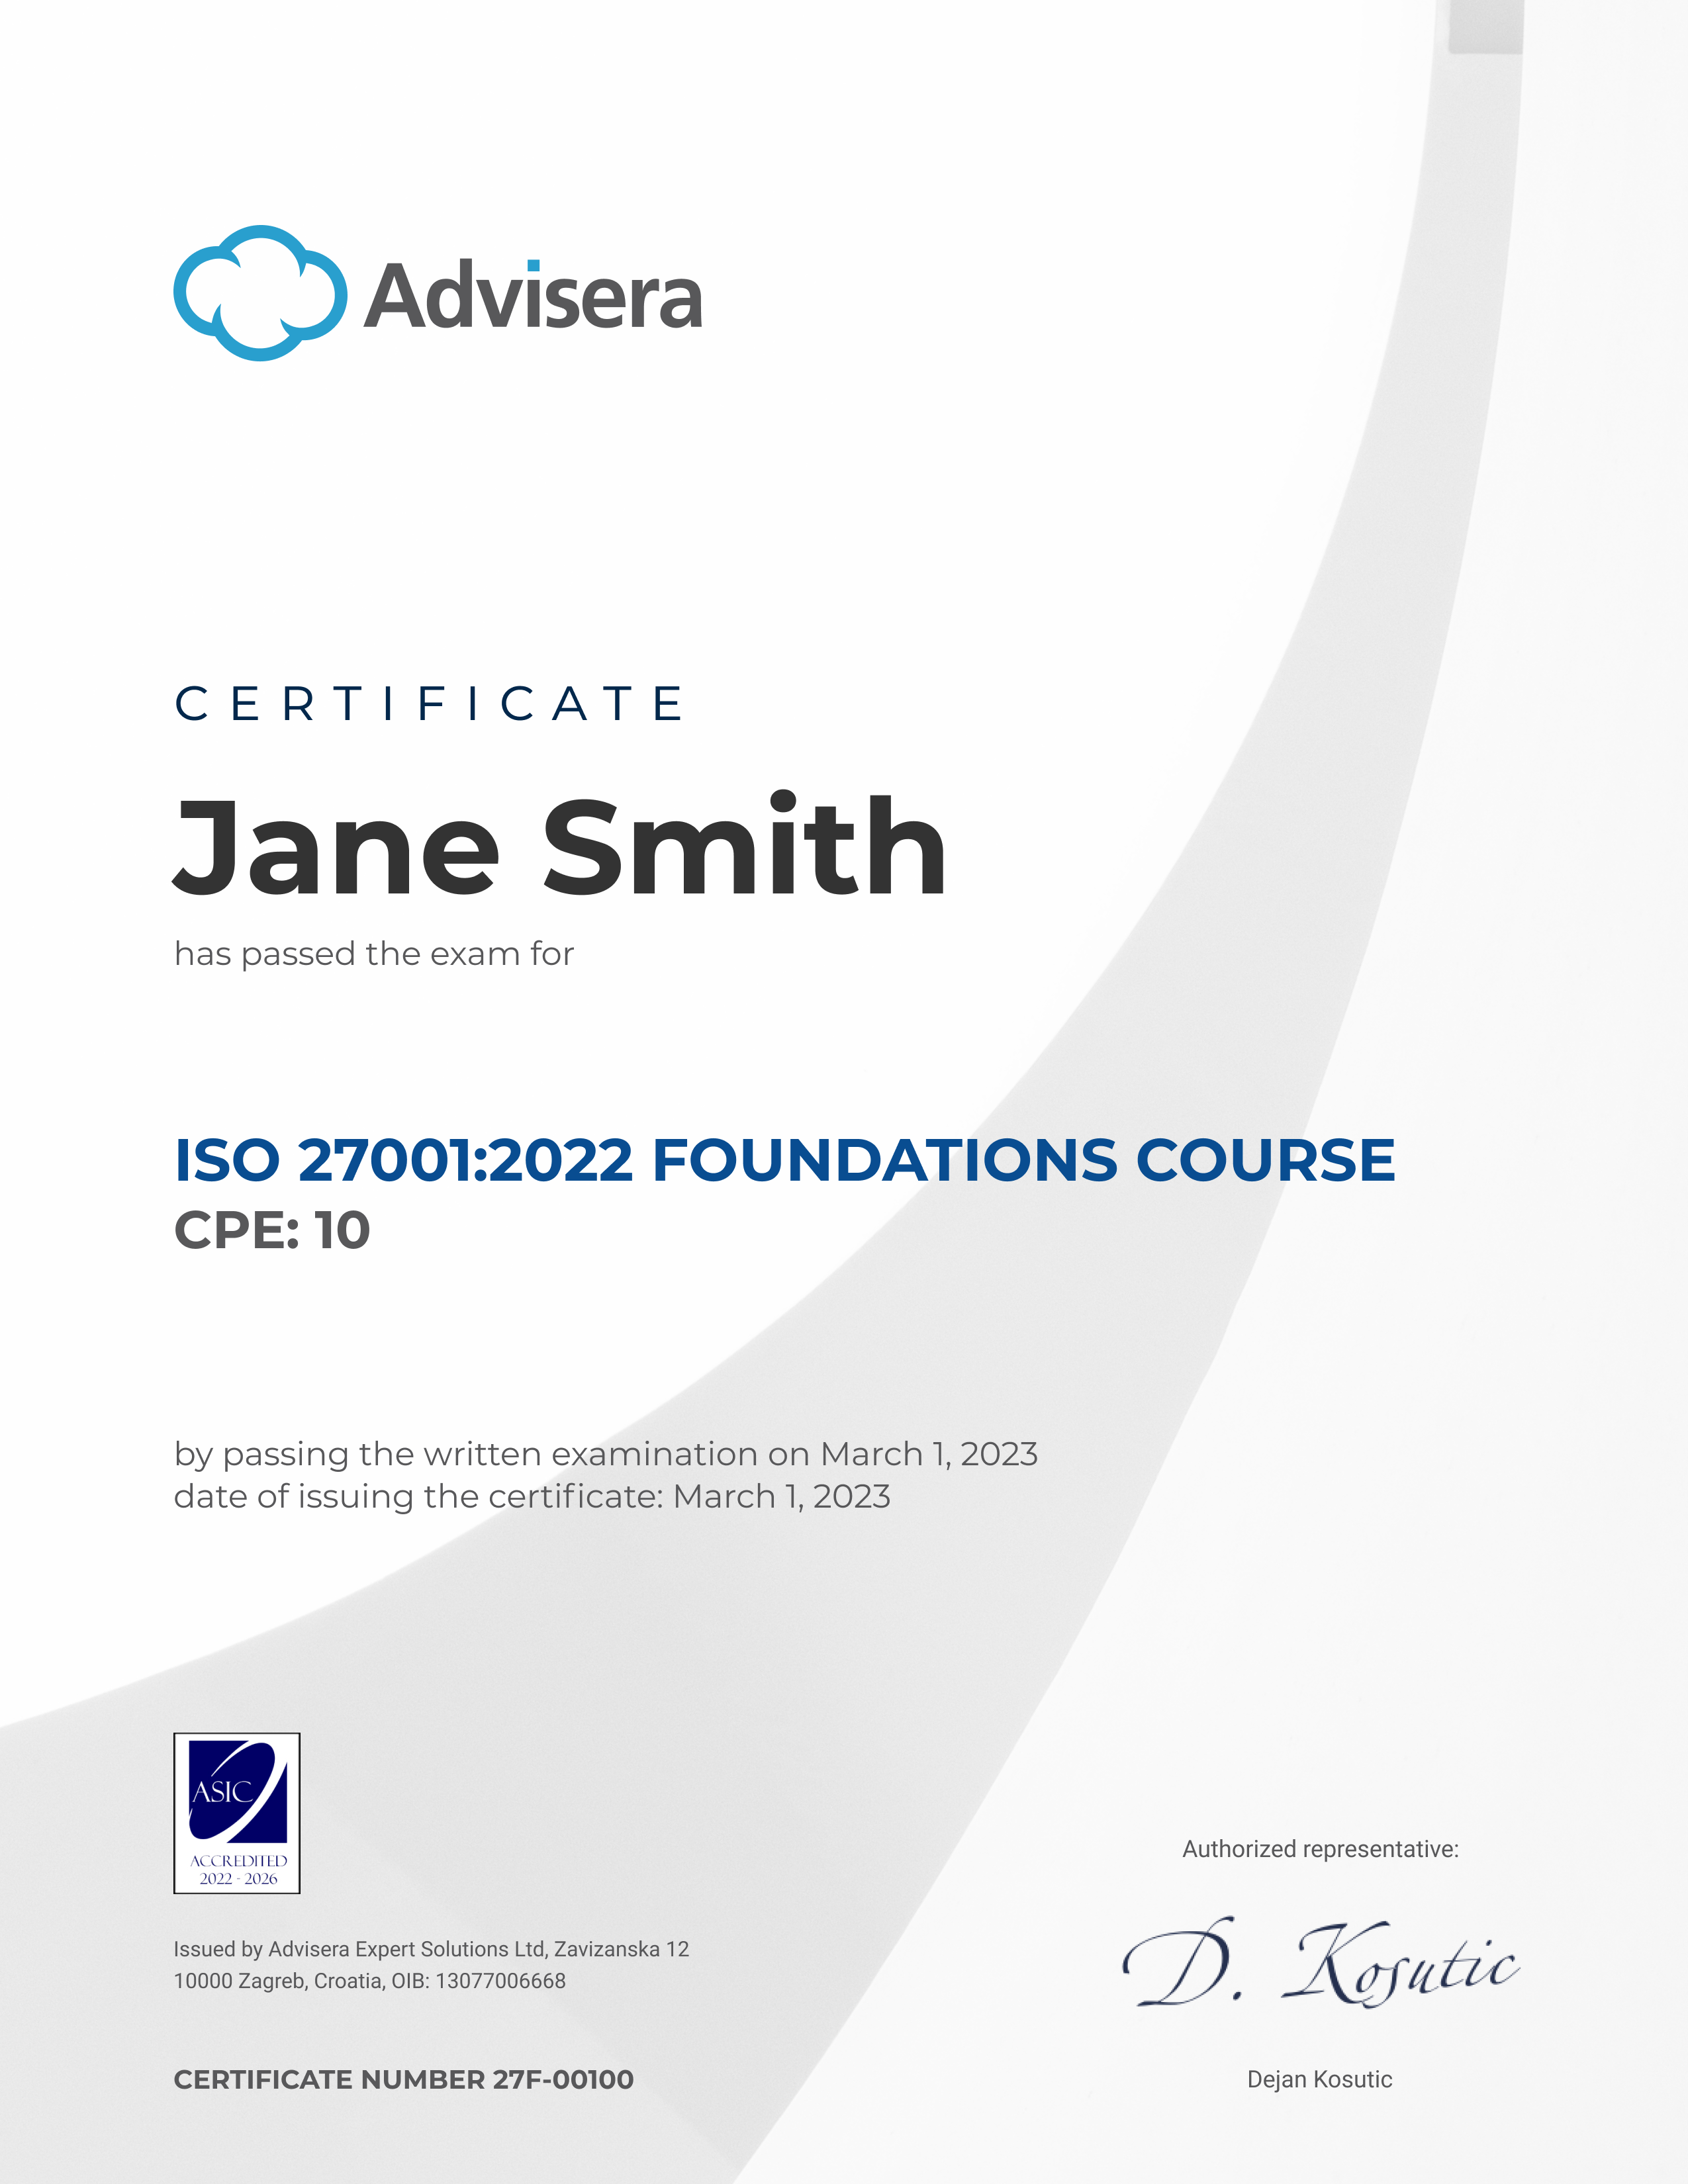 ISO 27001 Foundations Course Certificate - Advisera